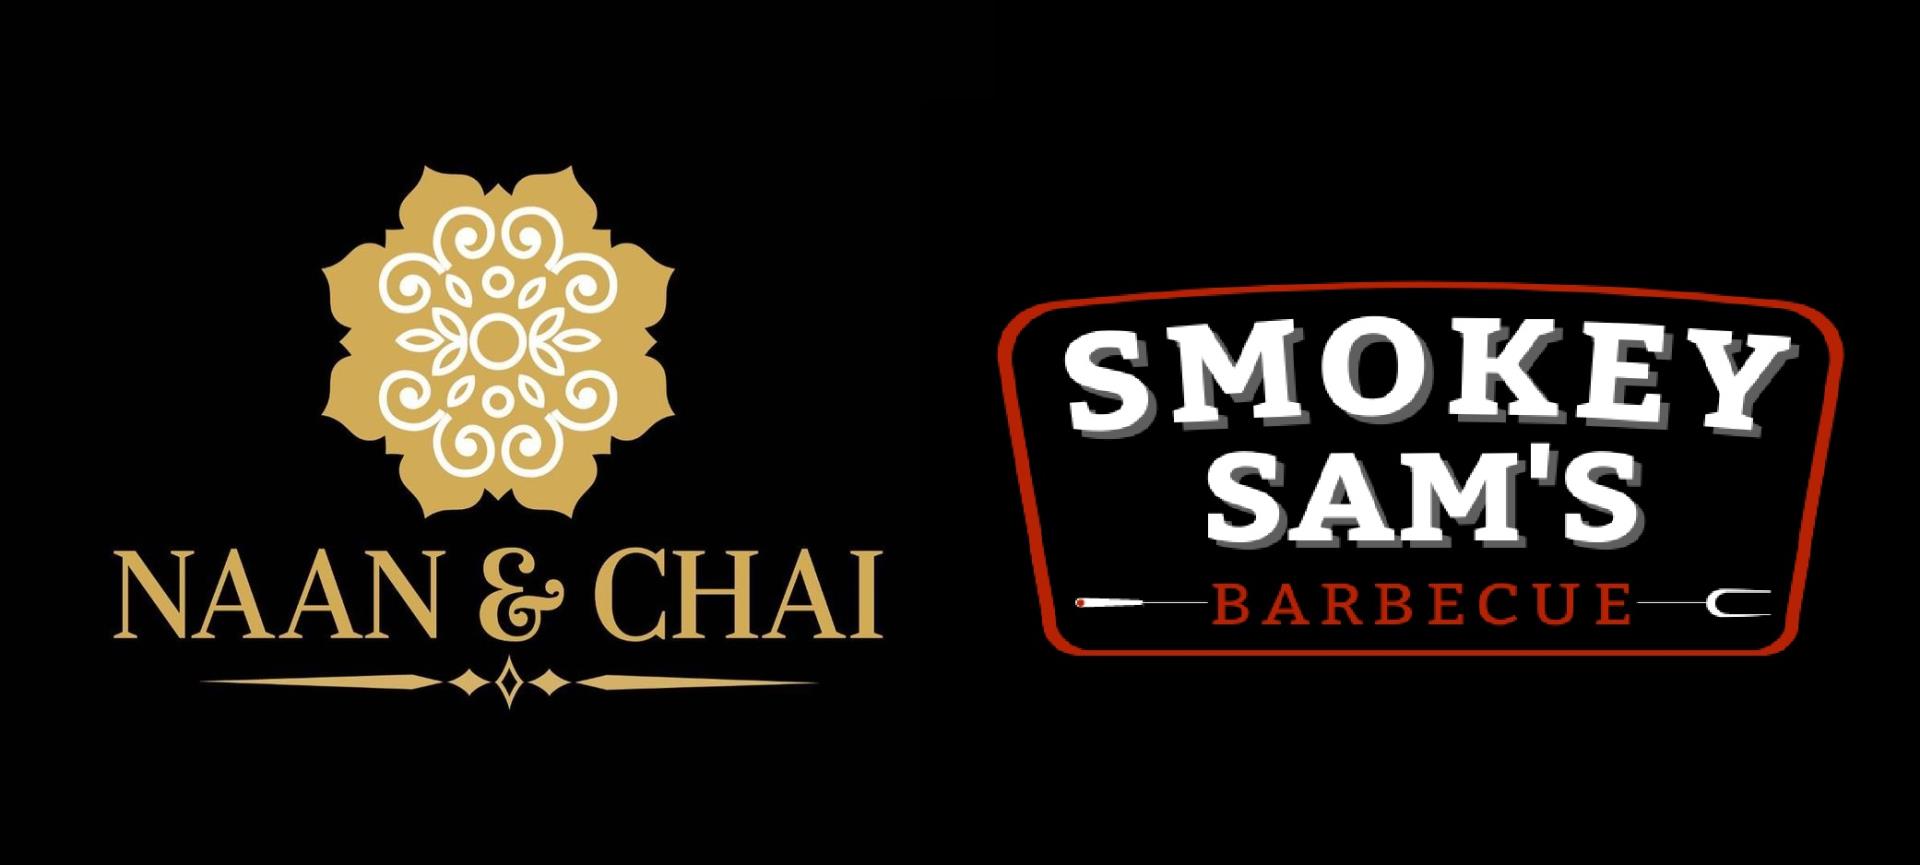 Naan & Chai  | Smokey Sam's Barbecue Restaurant - Picture